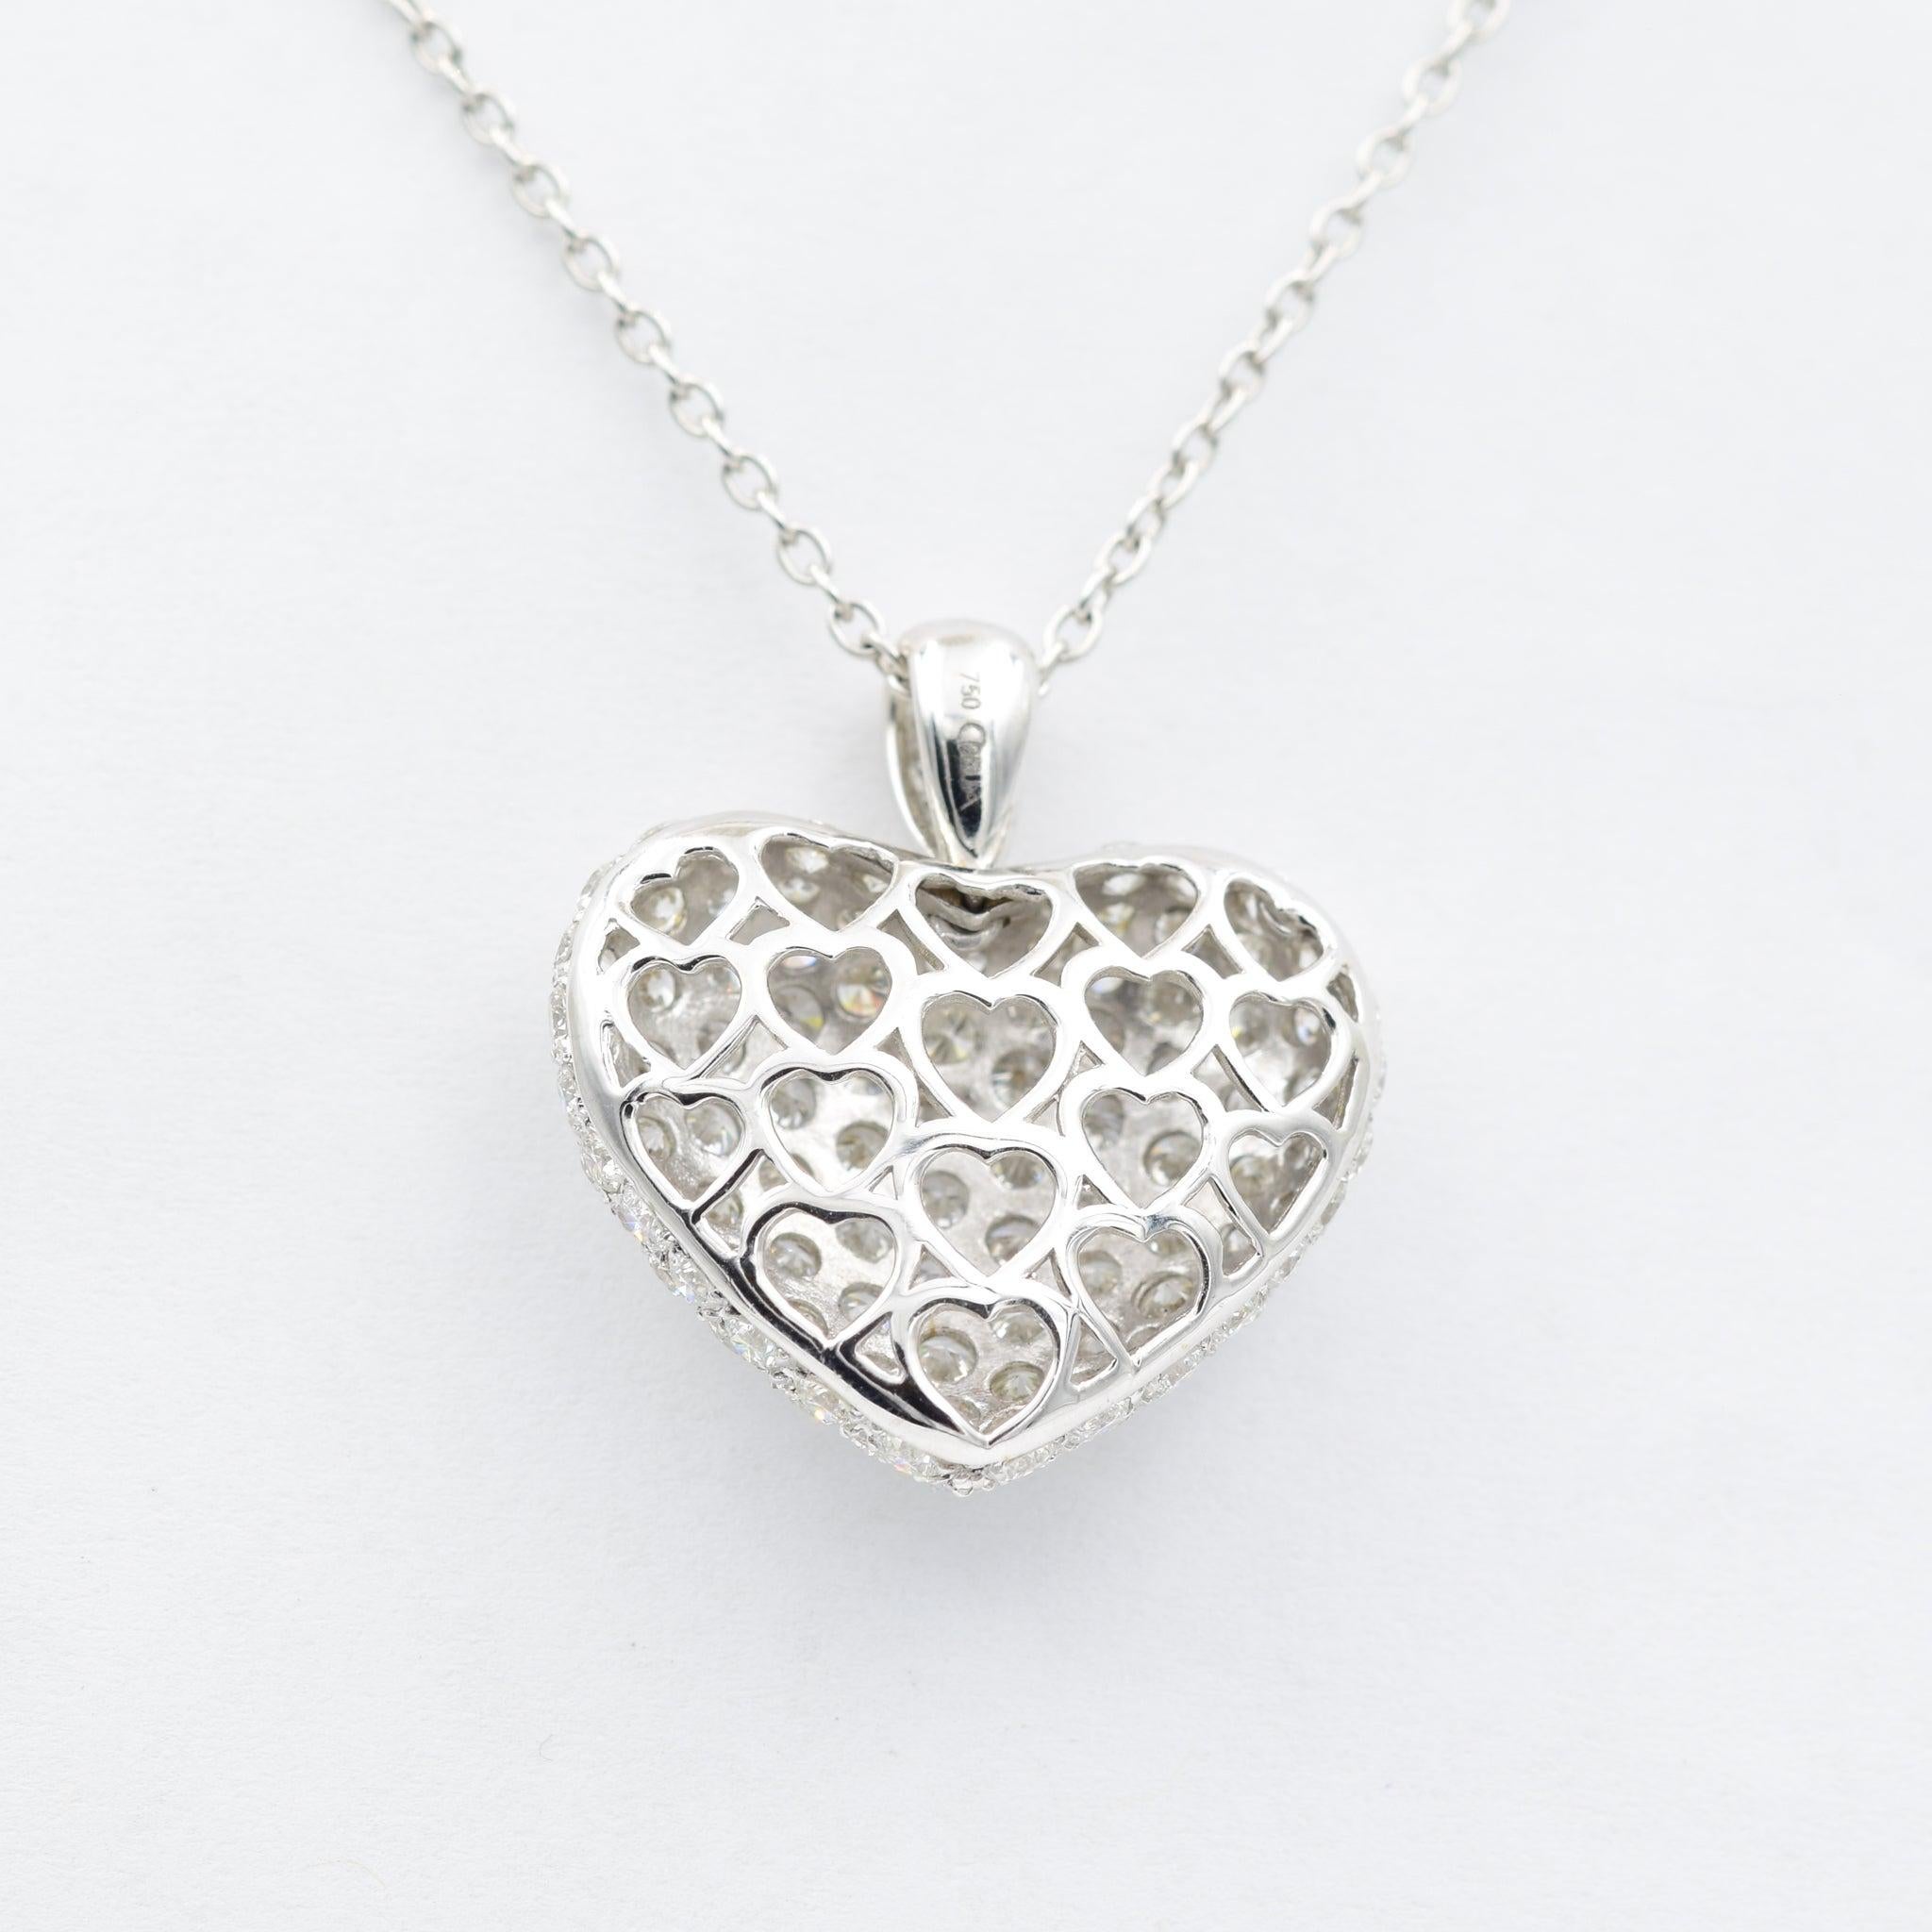 Odelia 4.21 Carat Diamond Heart Pendant Necklace in 18 Karat White Gold 1